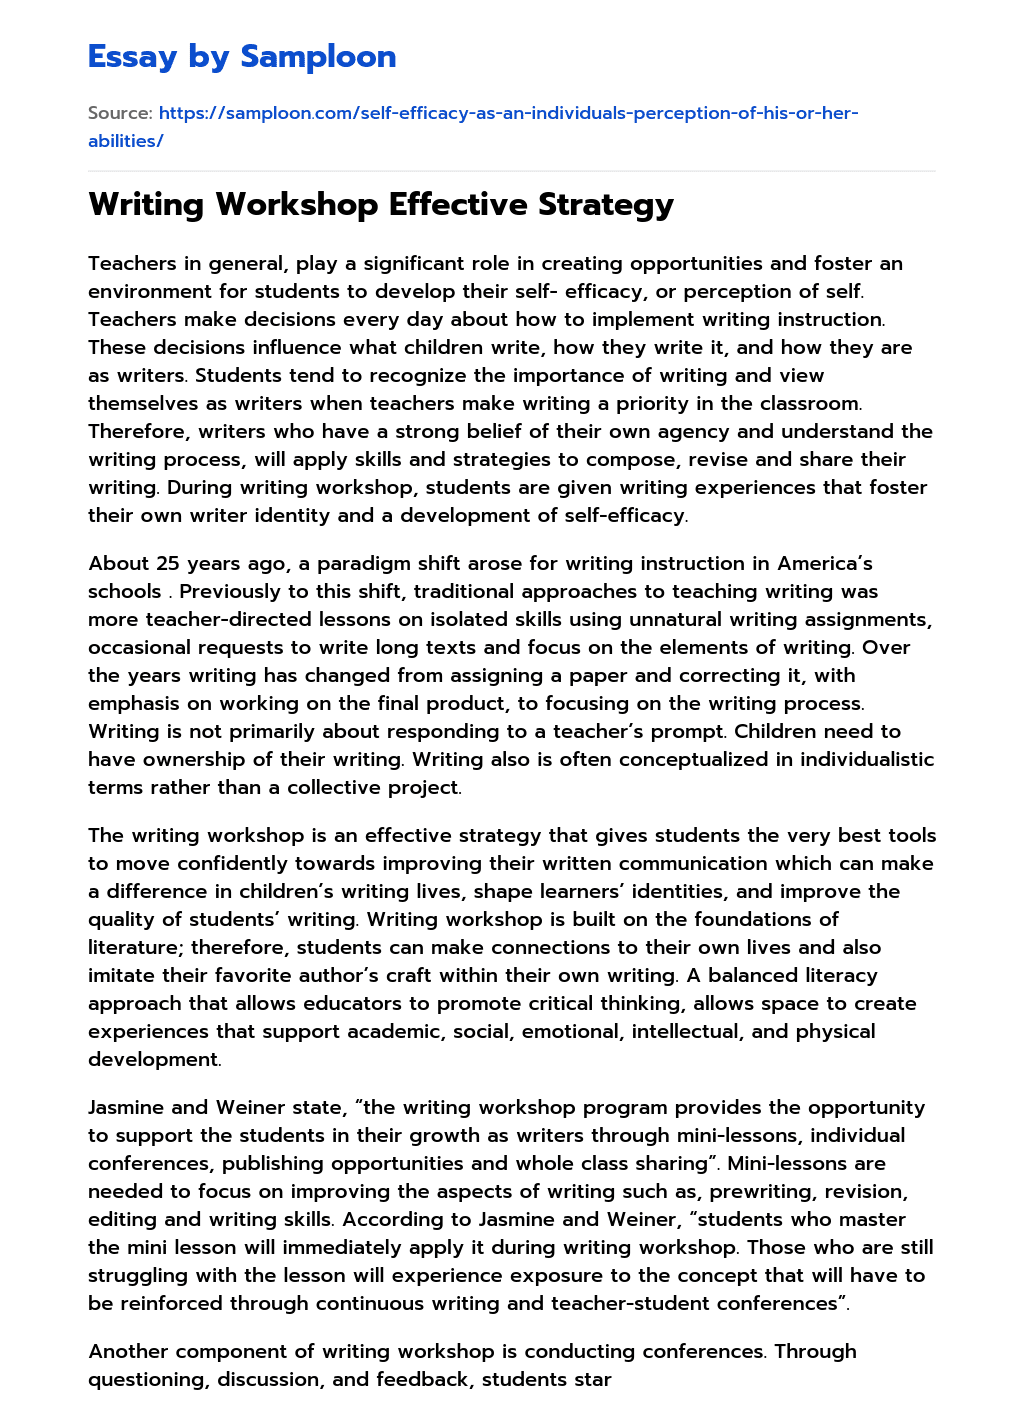 Writing Workshop Effective Strategy essay